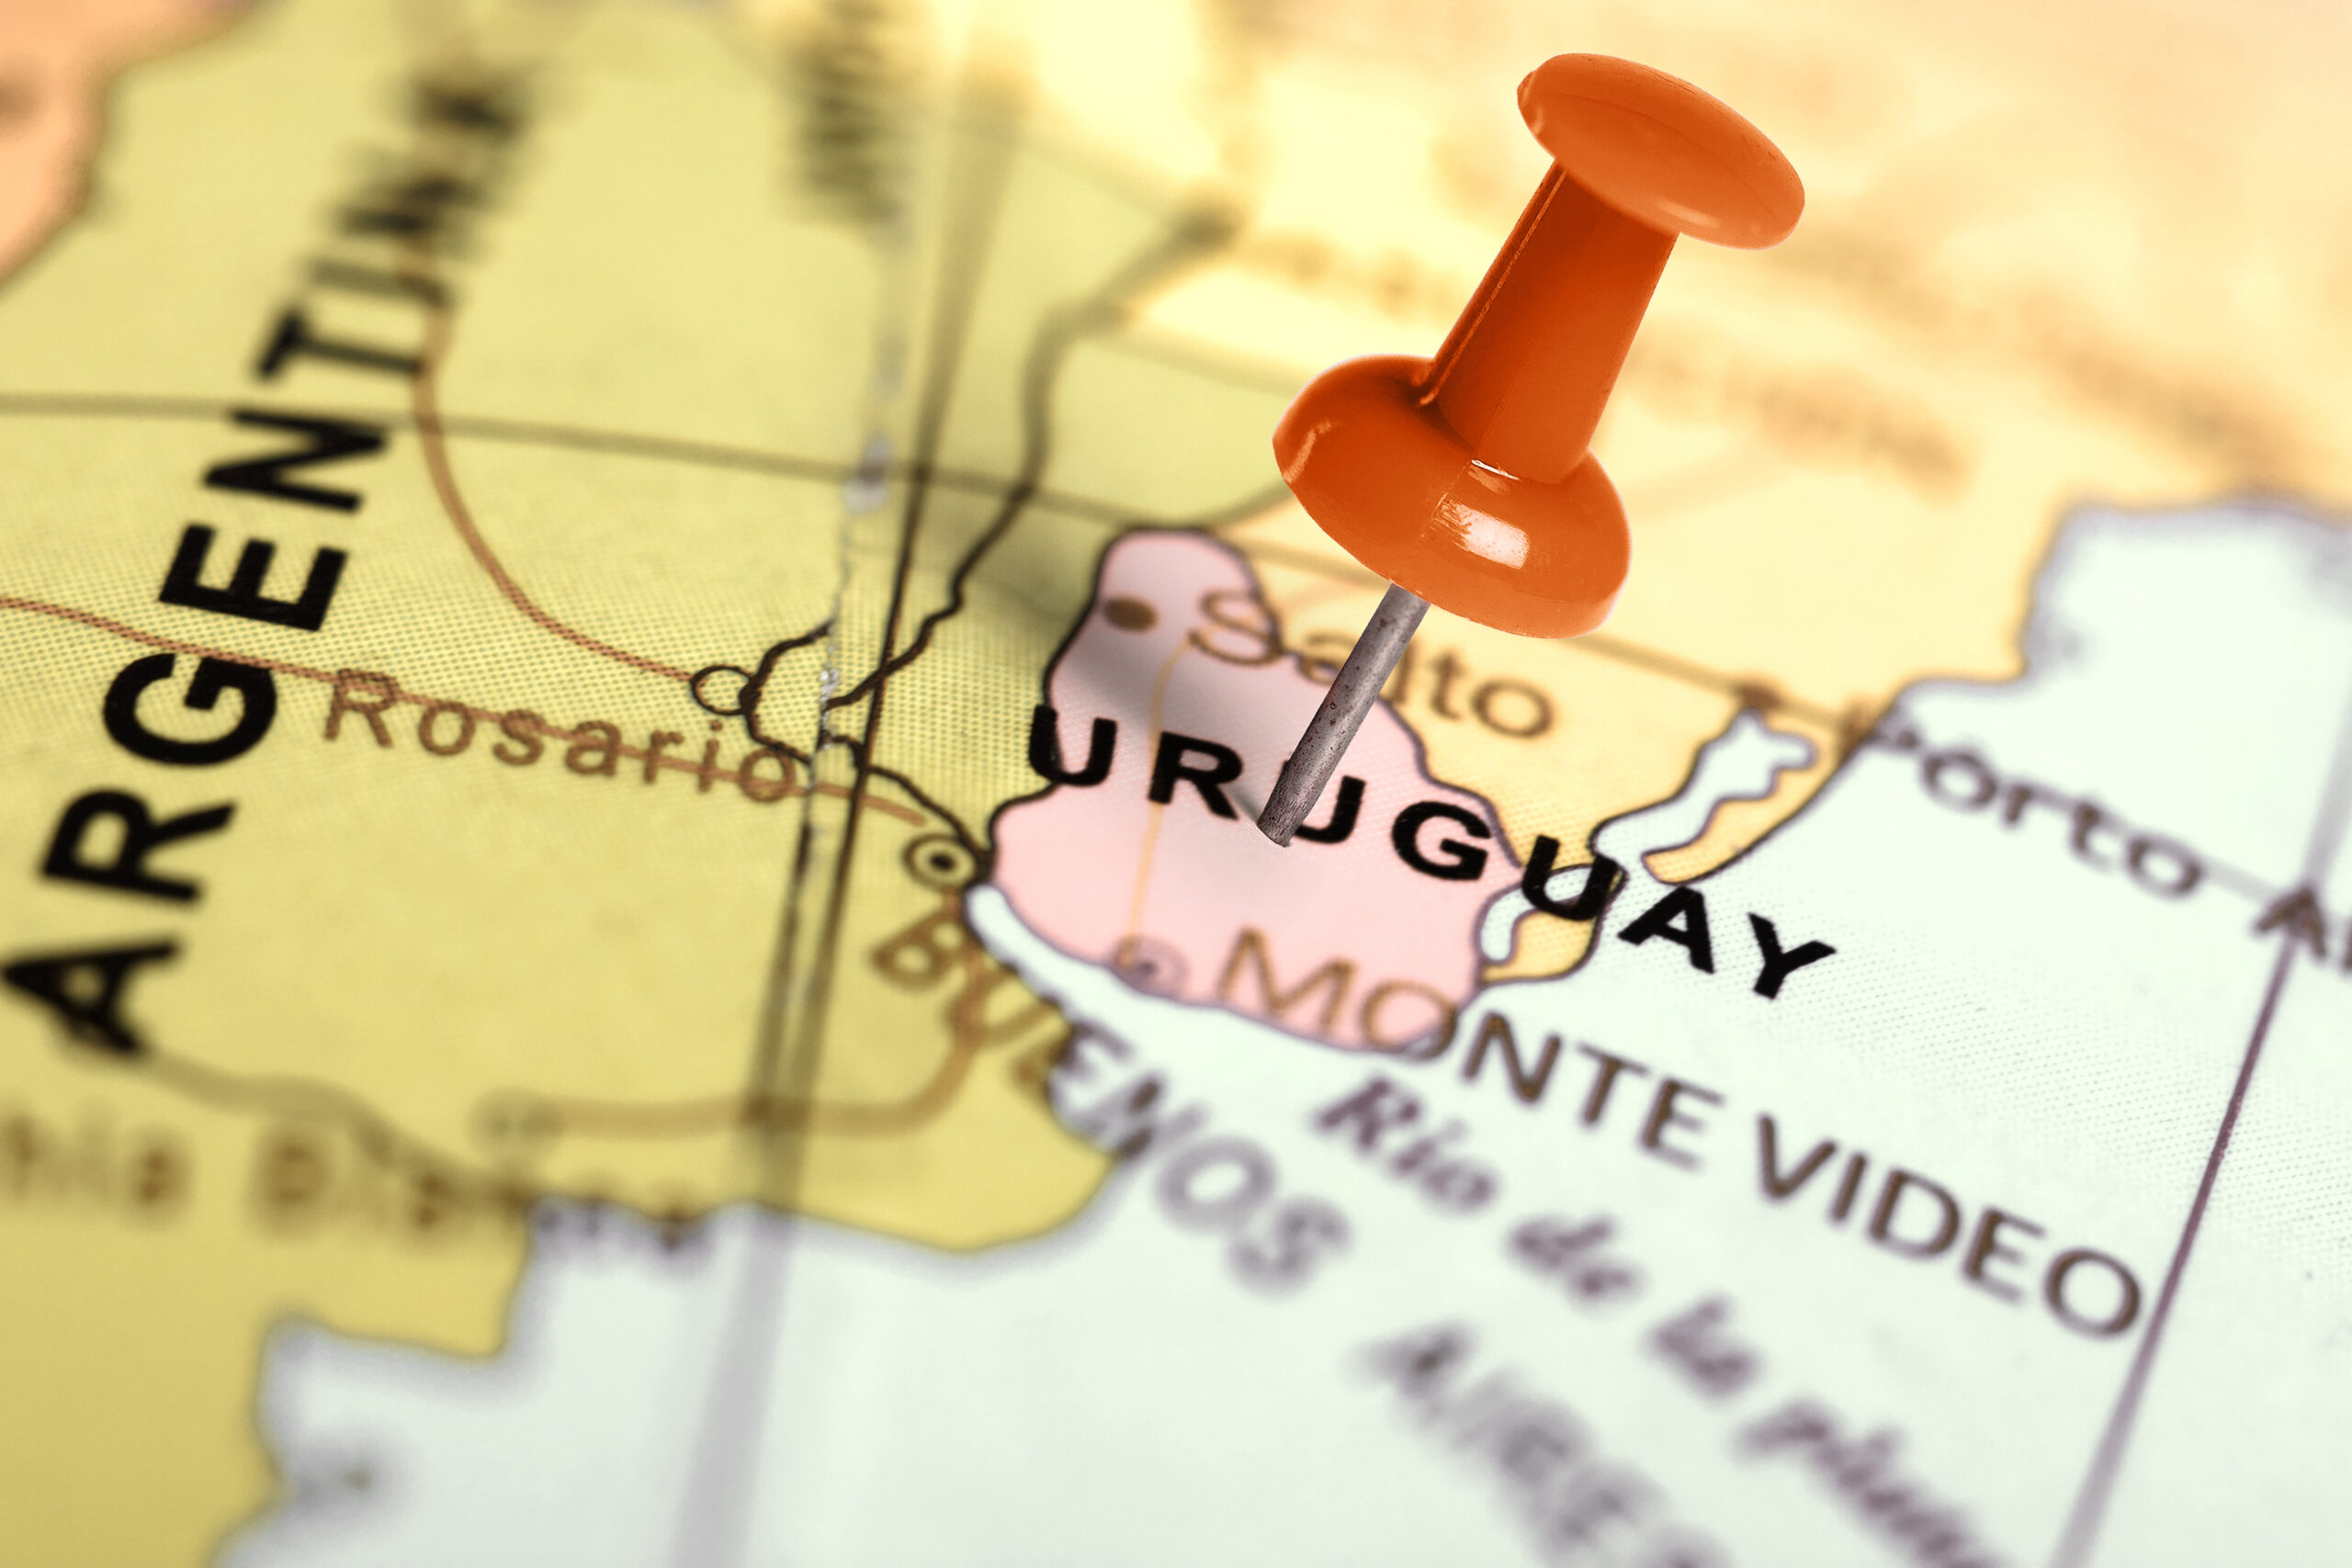 foreign trade zones in uruguay